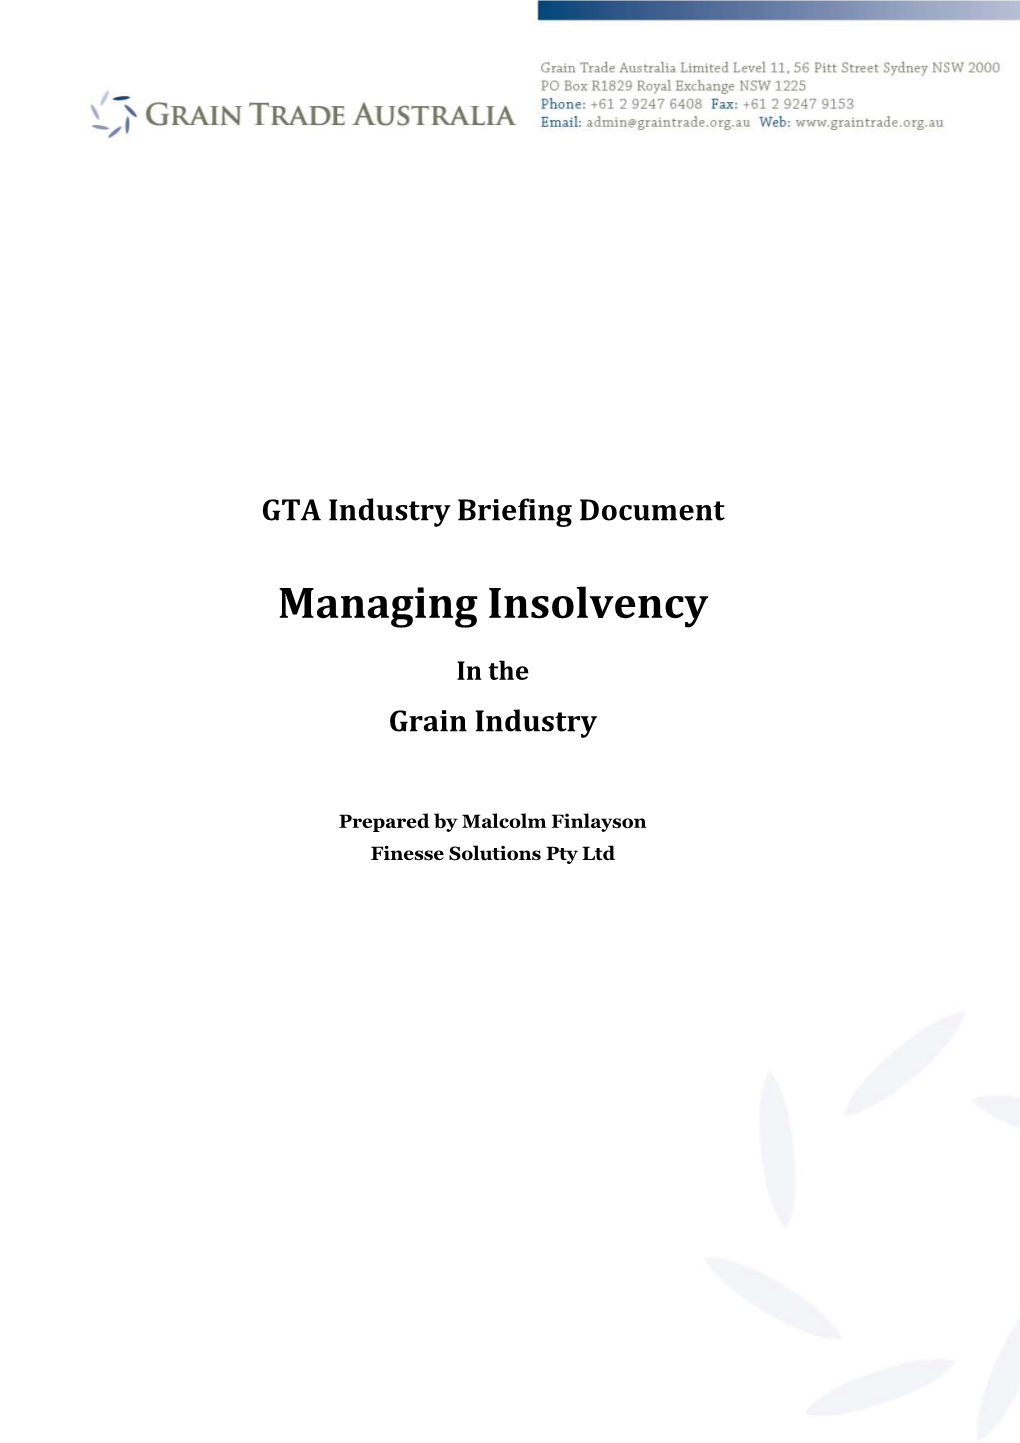 GTA Industry Briefing Document